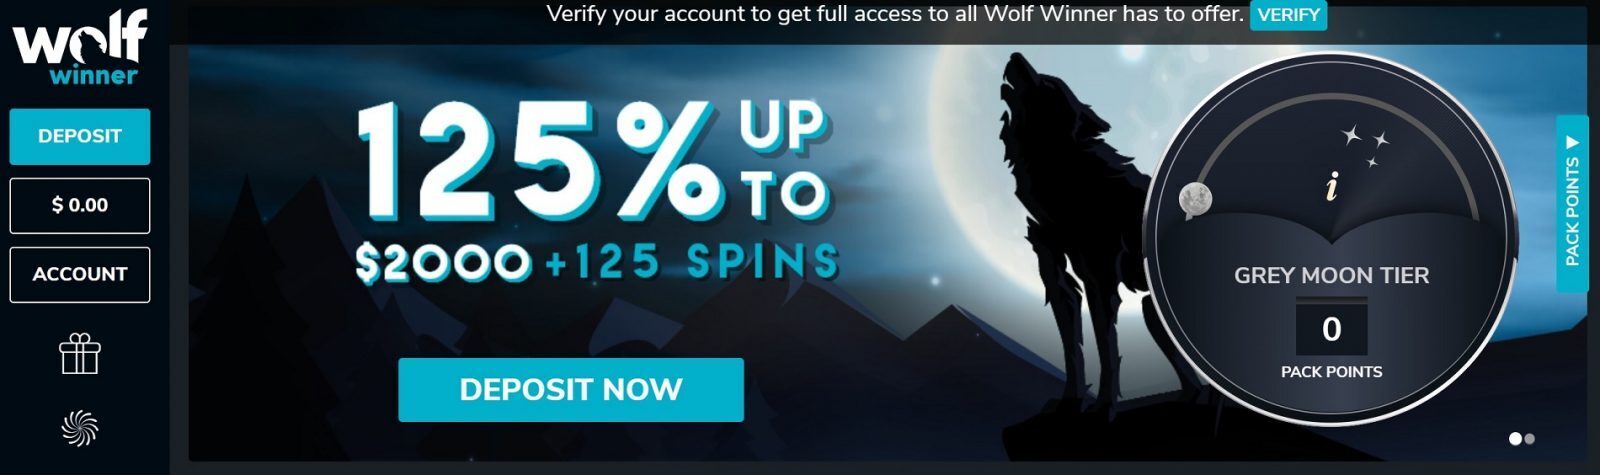 Wolf Winner deposit